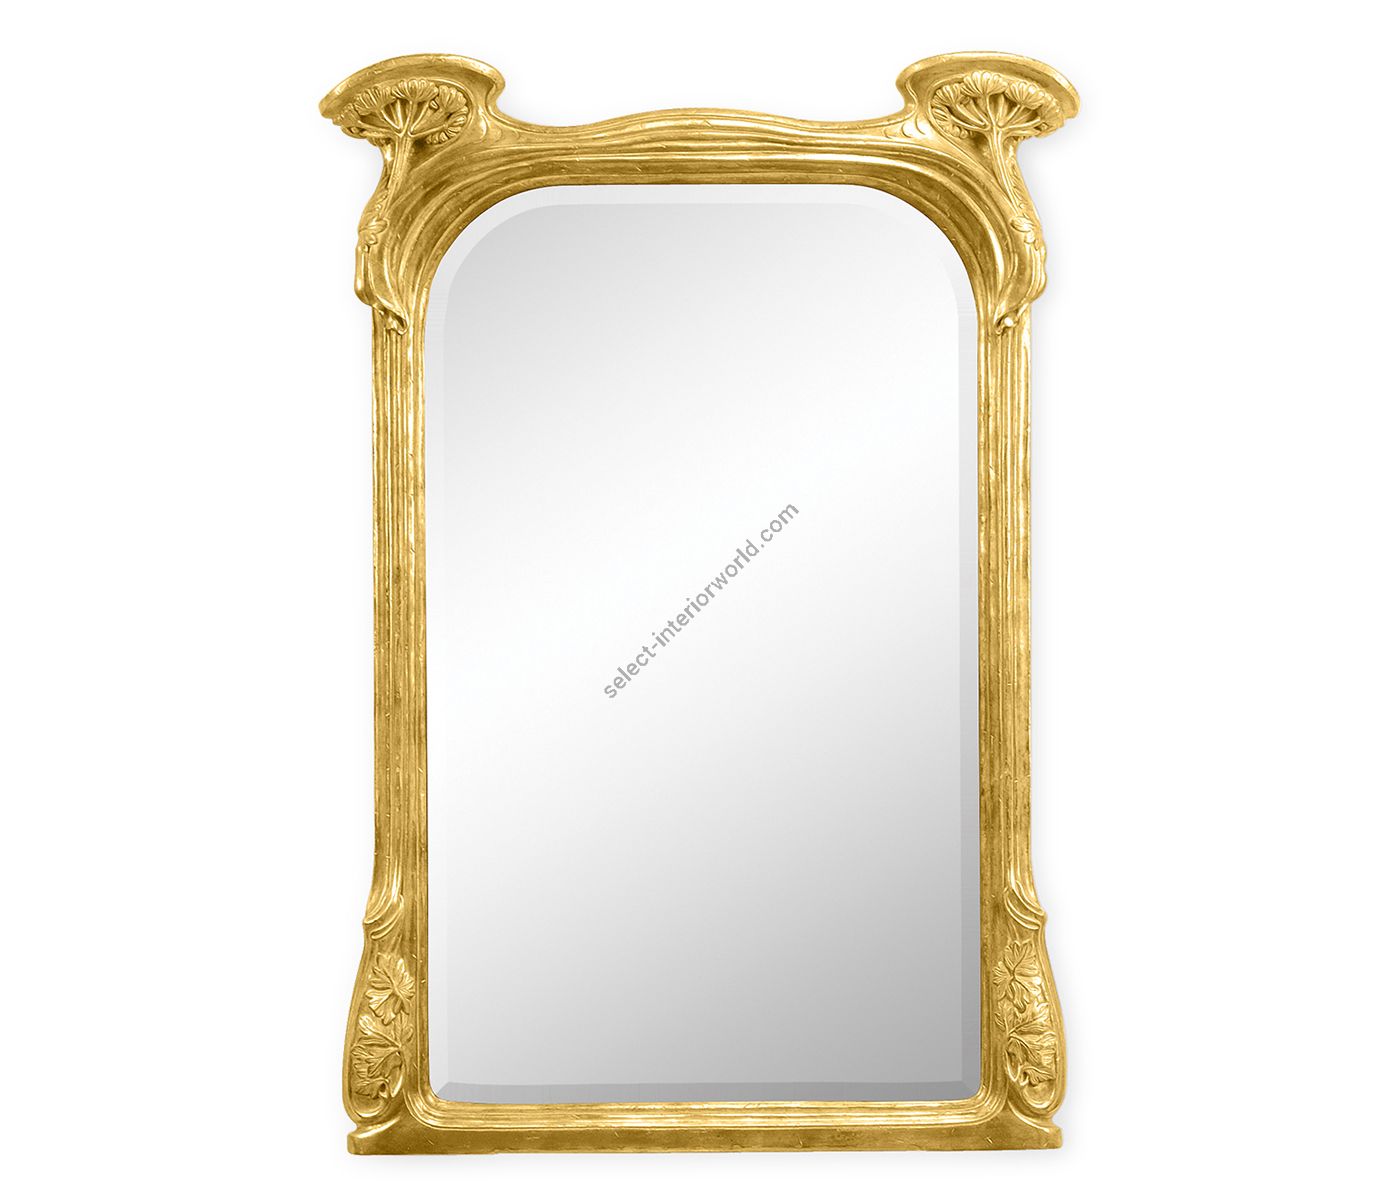 Jonathan Charles Fine Furniture / Art Nouveau gilded mirror / 493203